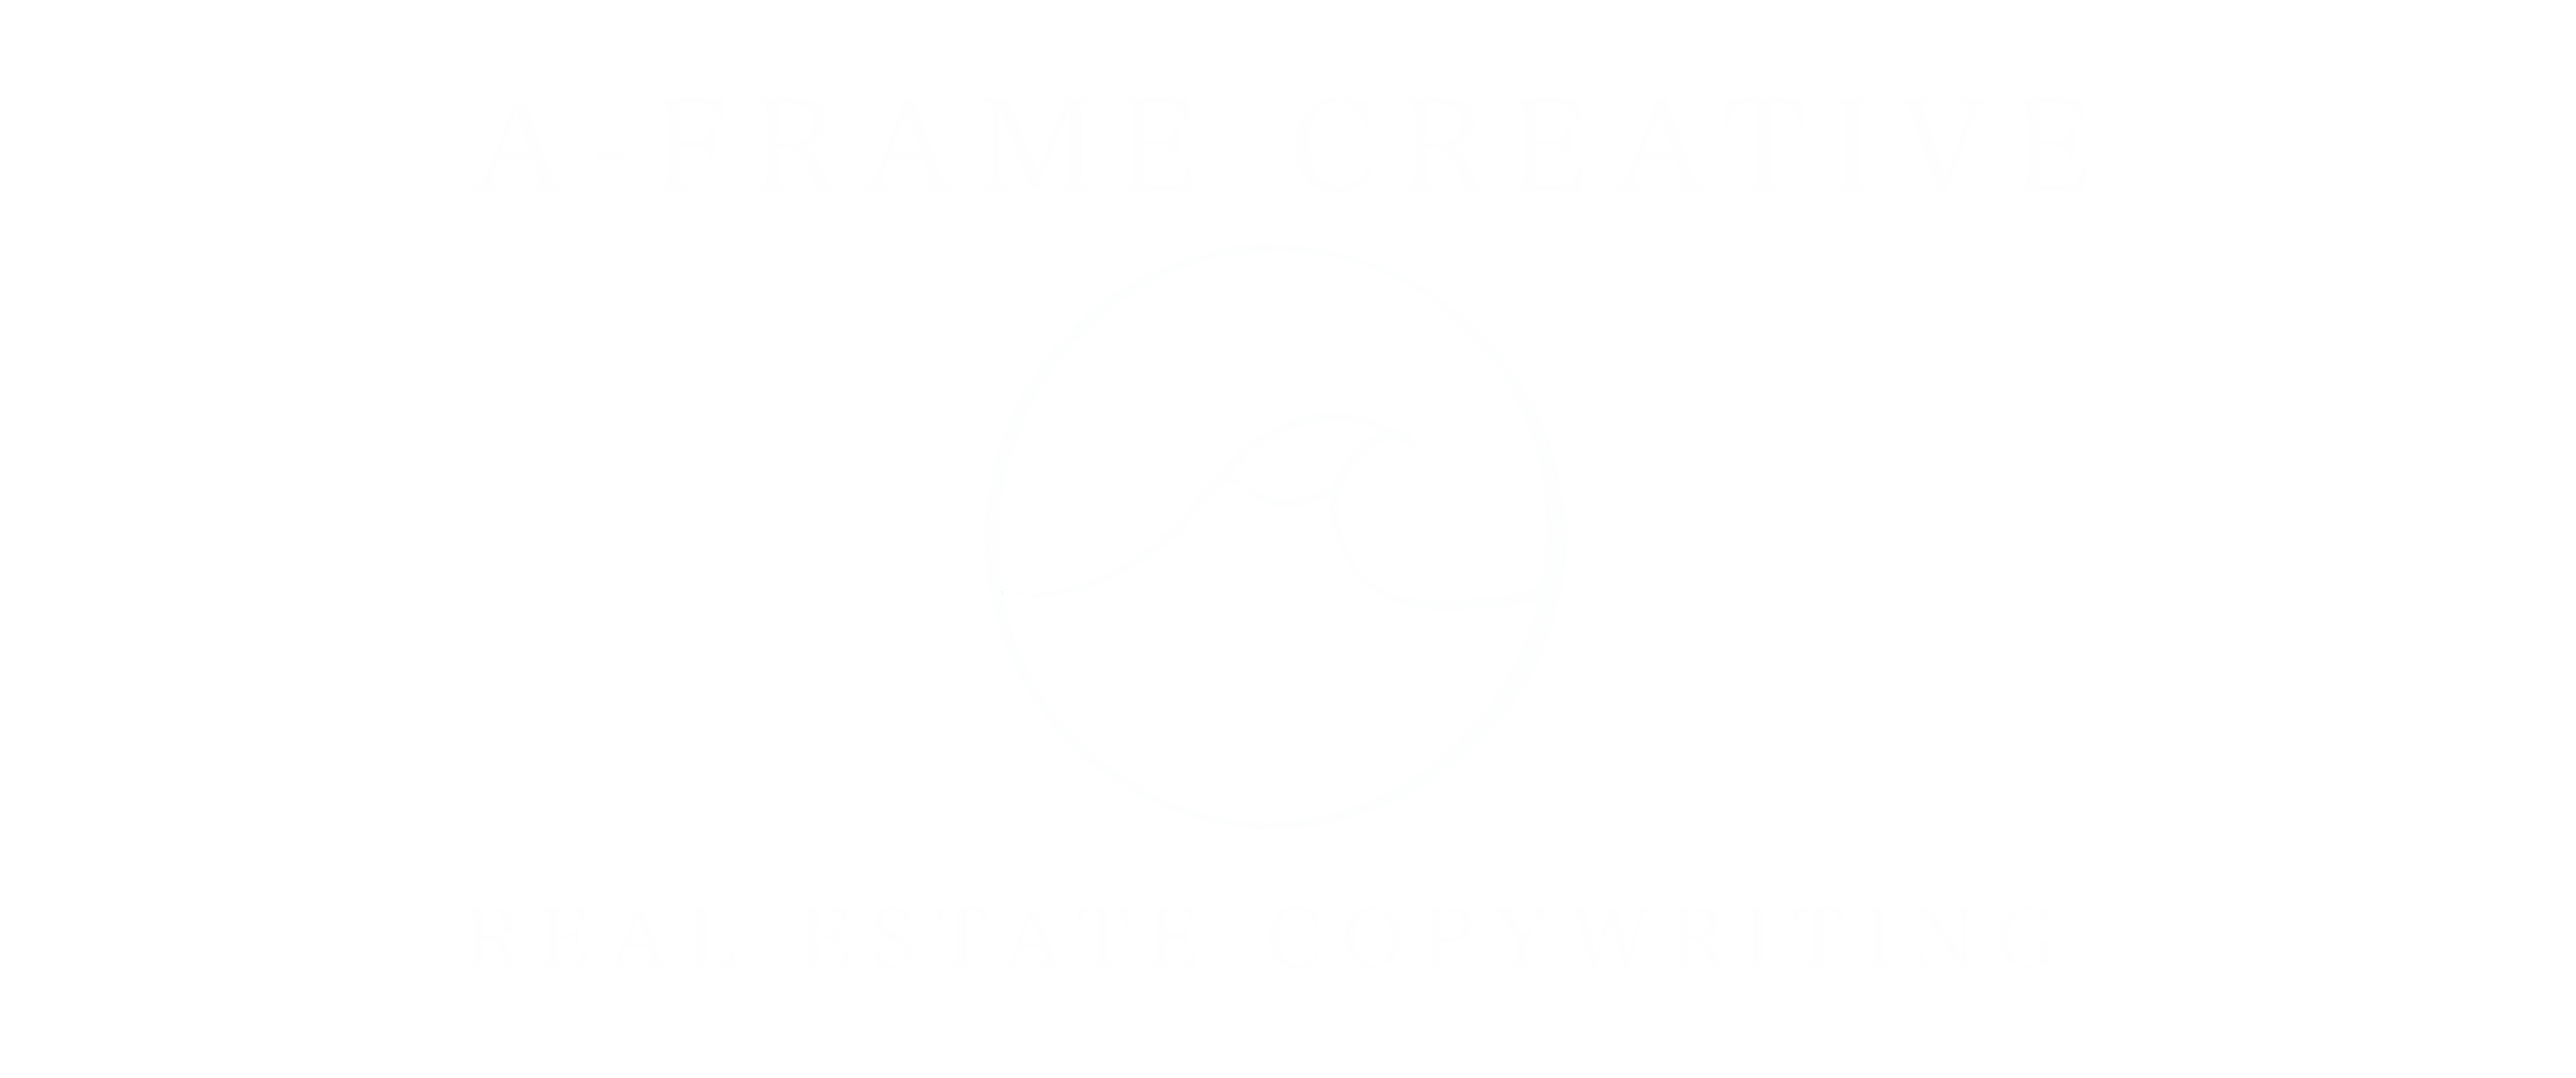 A-FRAME CREATIVE